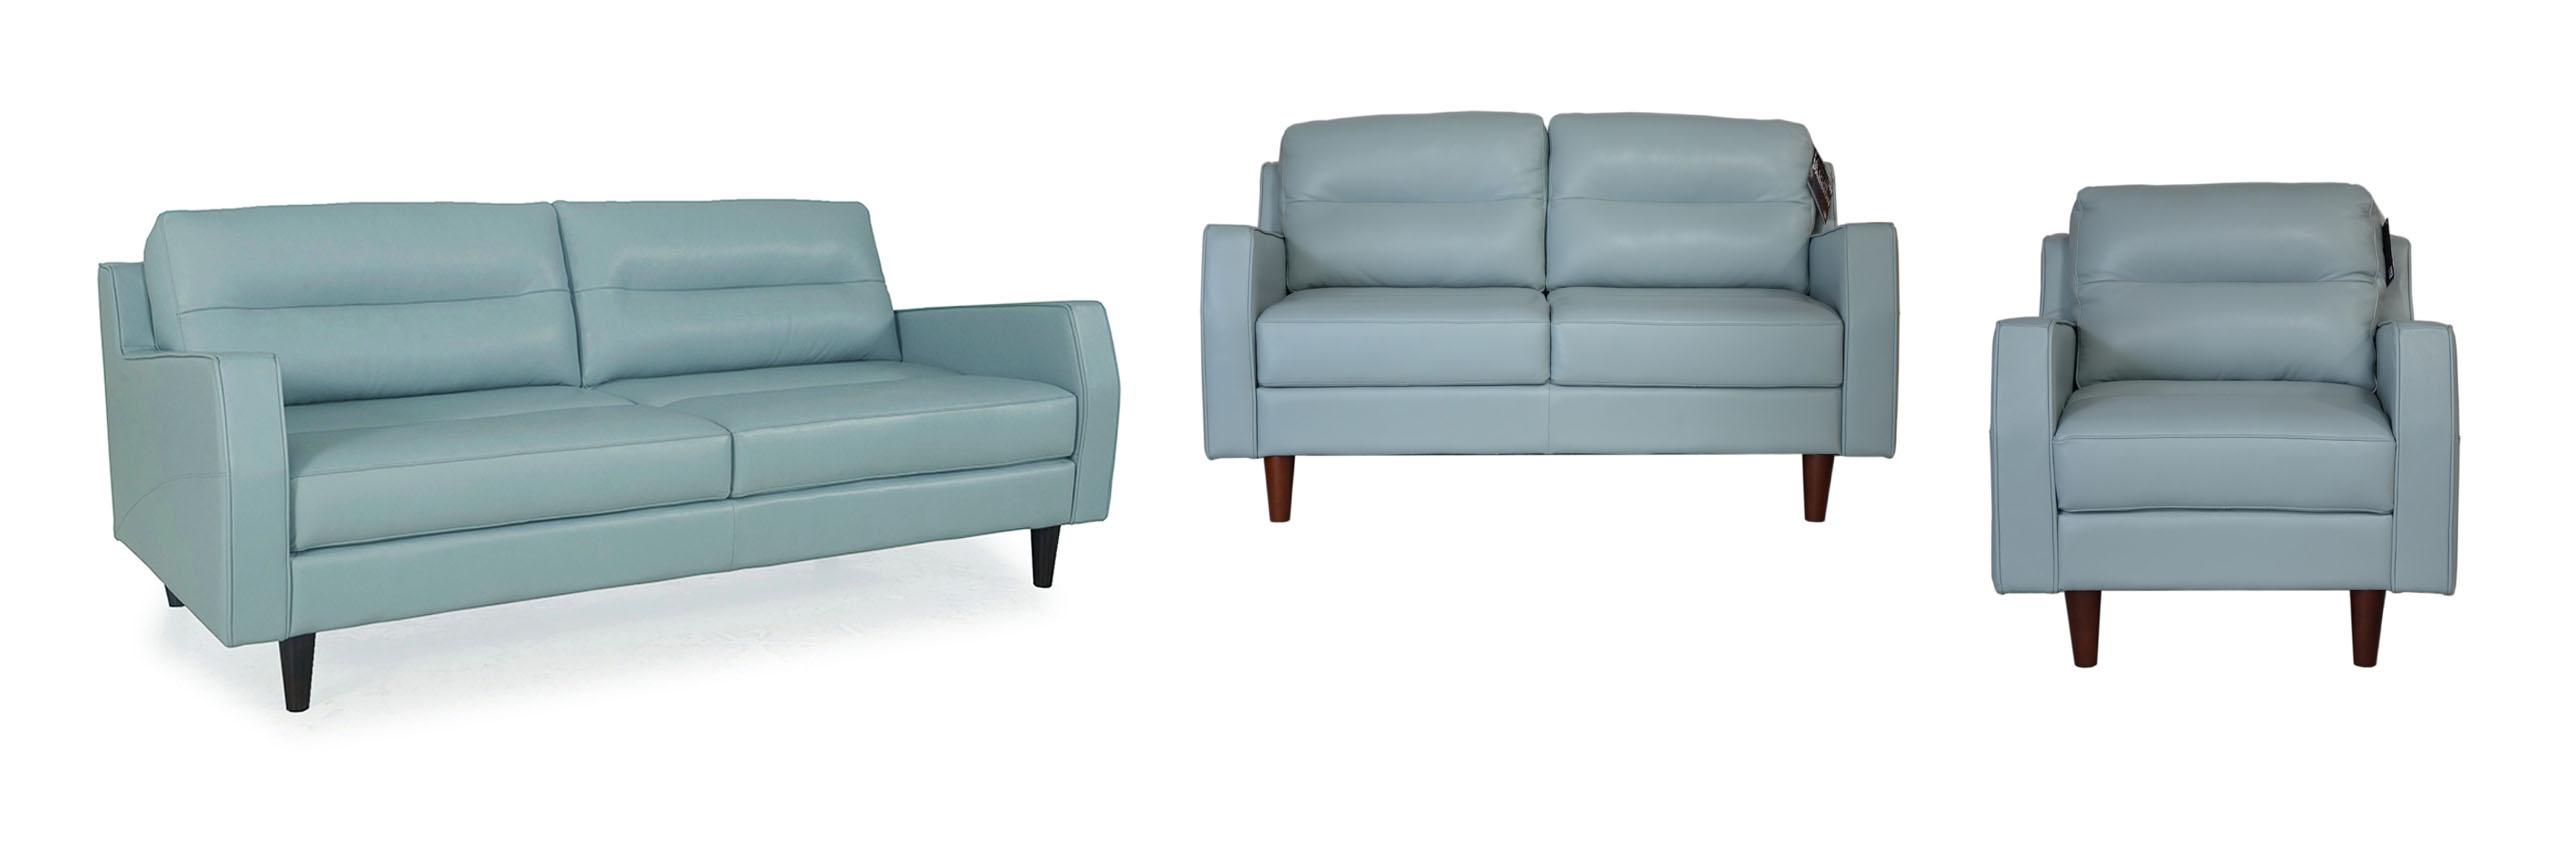 

    
Moroni Isabel 348 Bluette Top Grain Leather Upholstery Mid-Century Sofa Set 3Pcs
